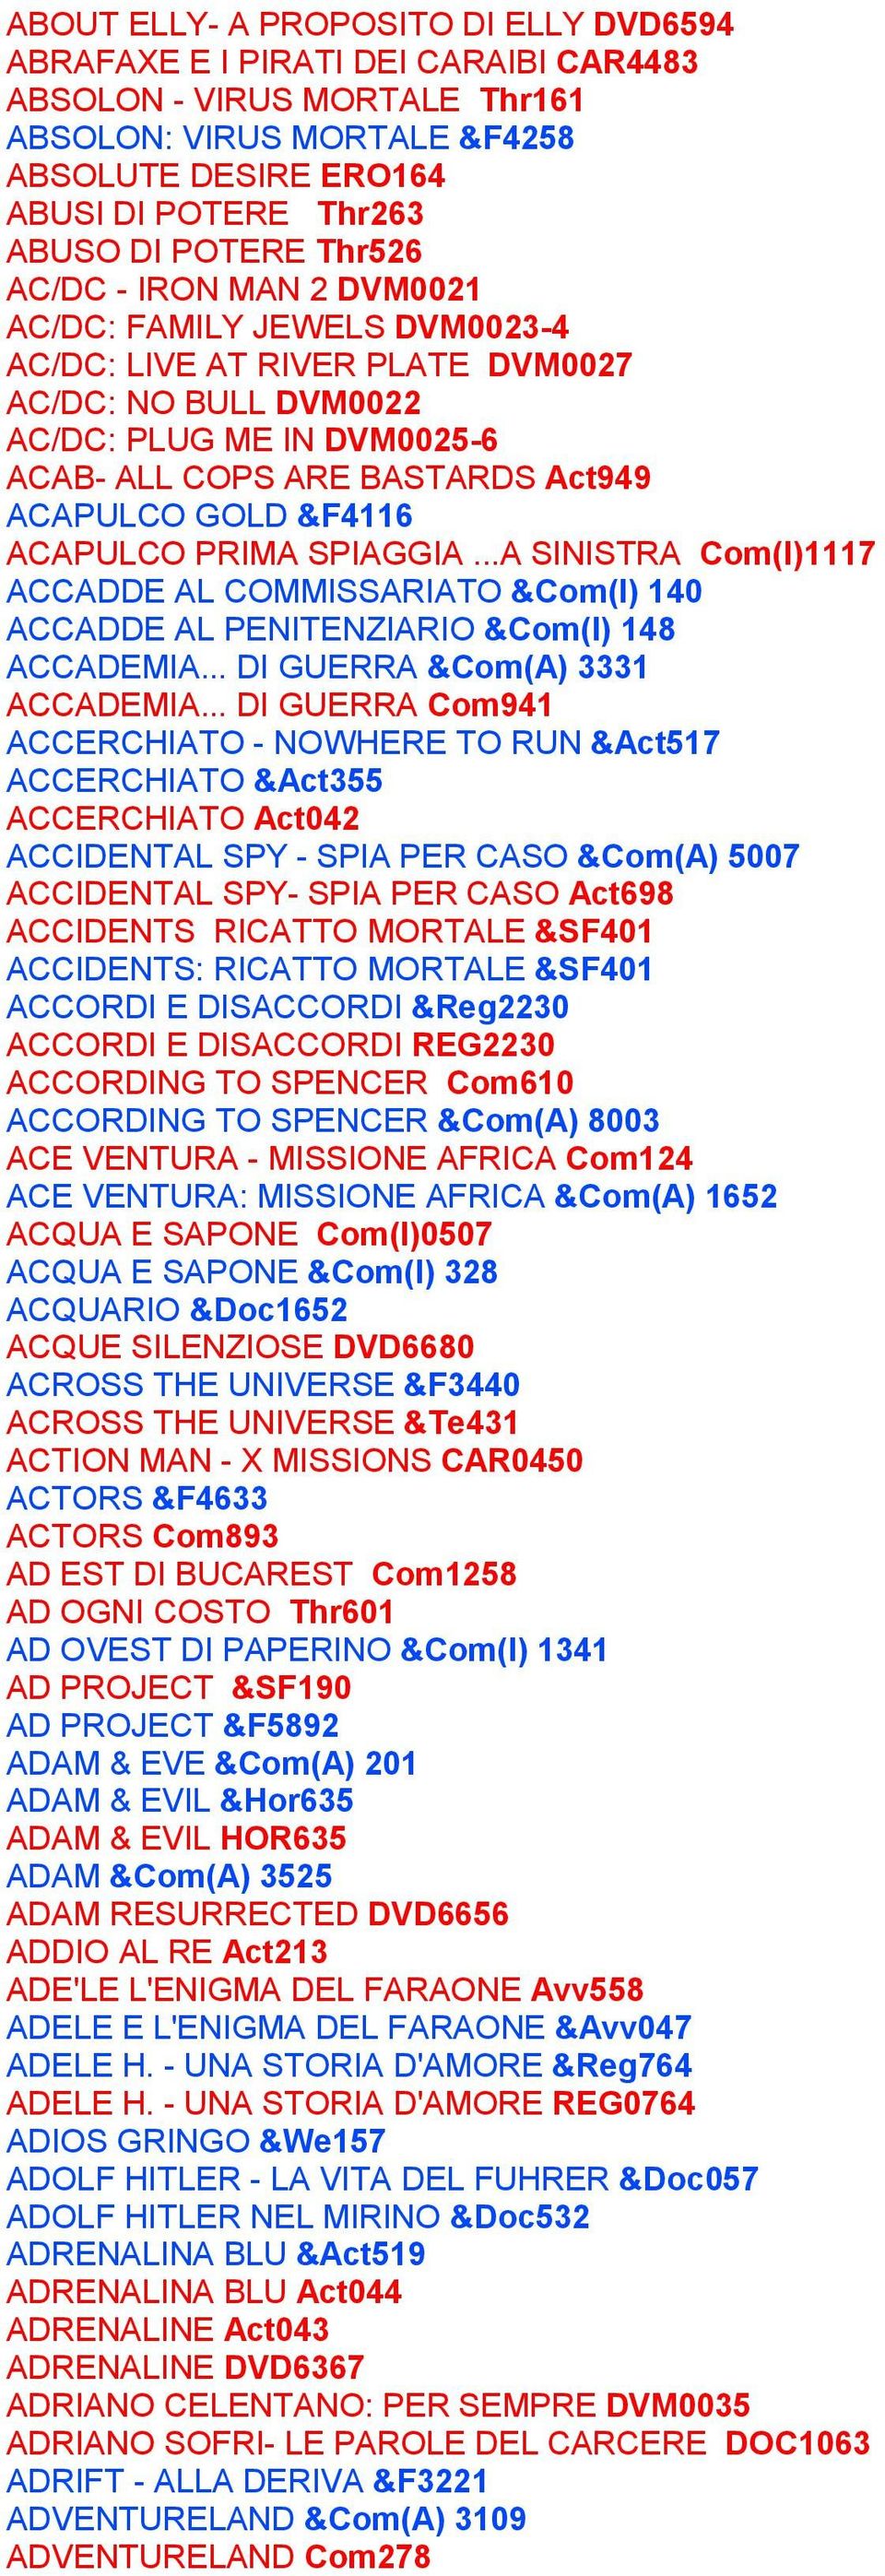 ACAPULCO GOLD &F4116 ACAPULCO PRIMA SPIAGGIA...A SINISTRA Com(I)1117 ACCADDE AL COMMISSARIATO &Com(I) 140 ACCADDE AL PENITENZIARIO &Com(I) 148 ACCADEMIA... DI GUERRA &Com(A) 3331 ACCADEMIA.